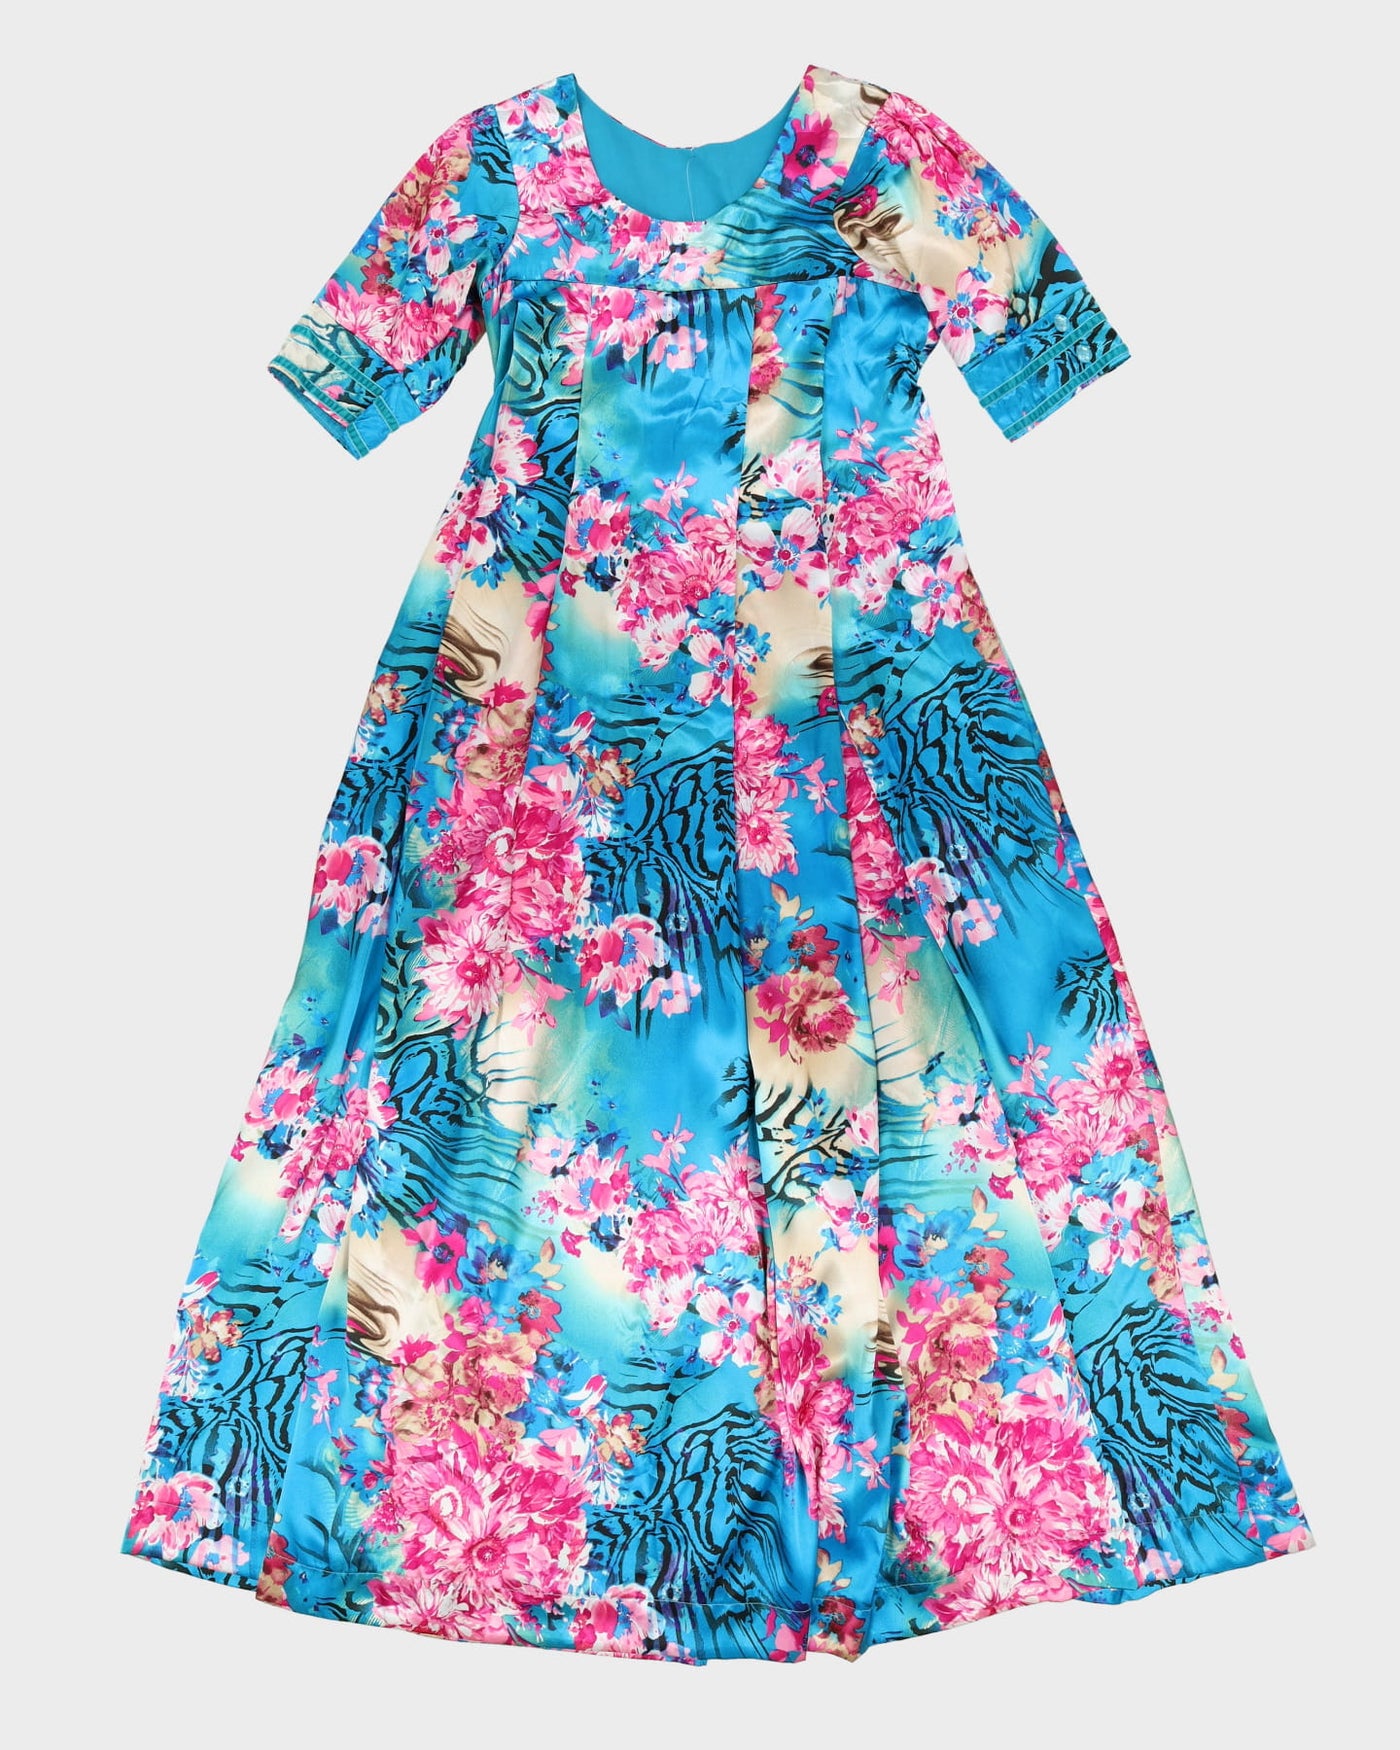 Floral kaftan style maxi dress - S / M